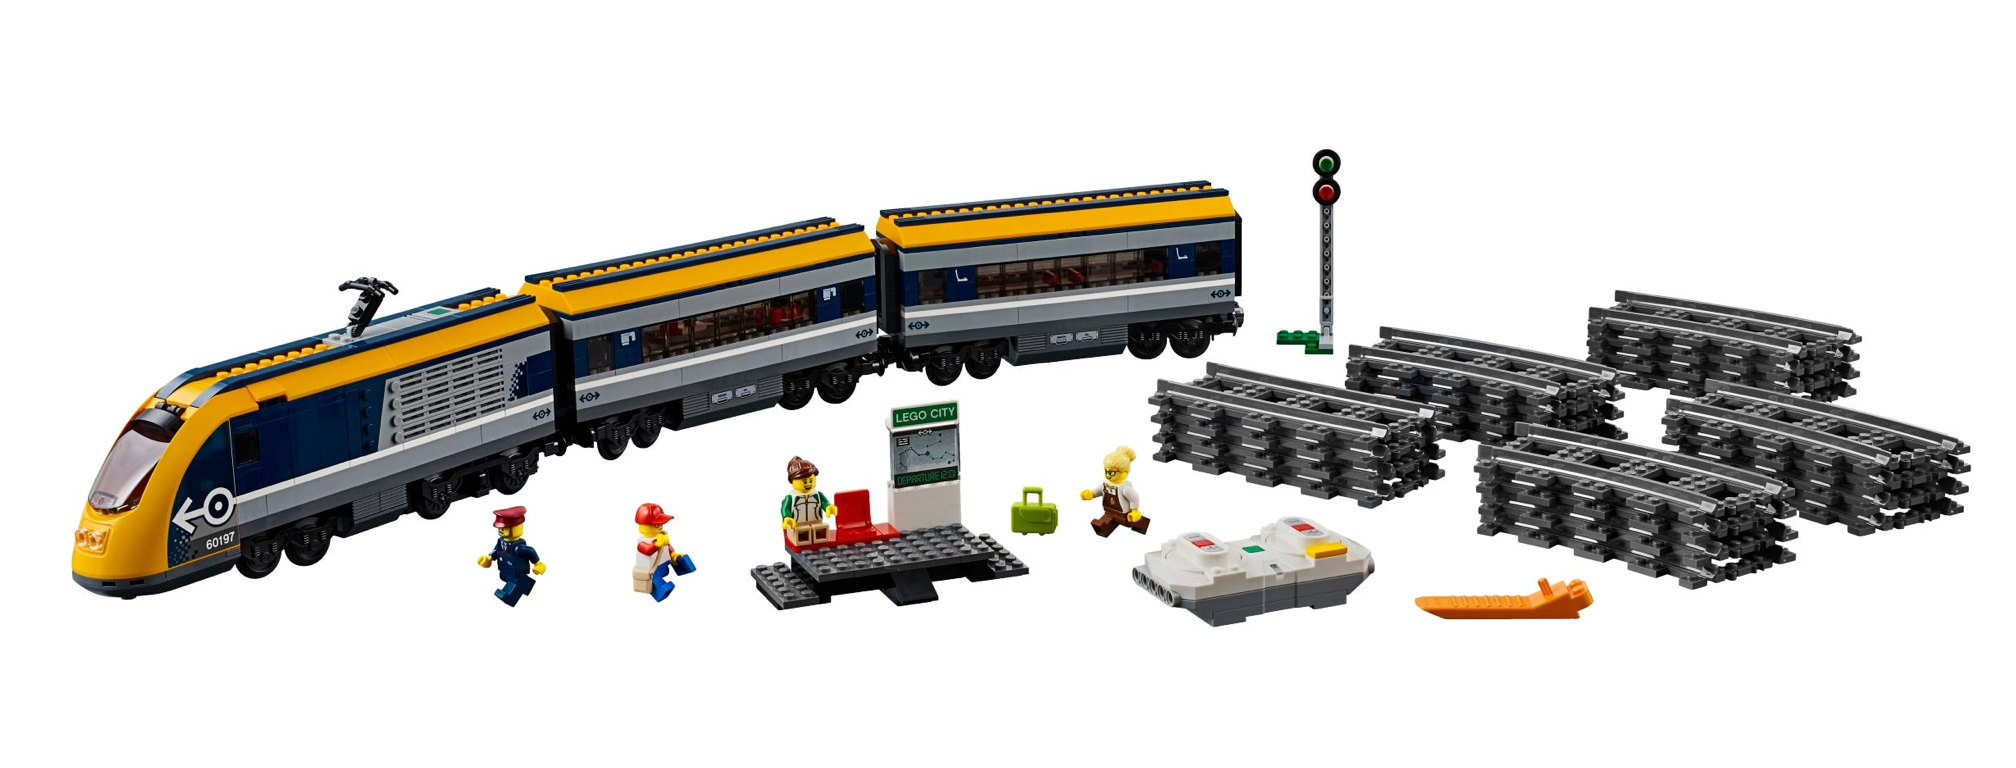 LEGO: City - Passenger Train